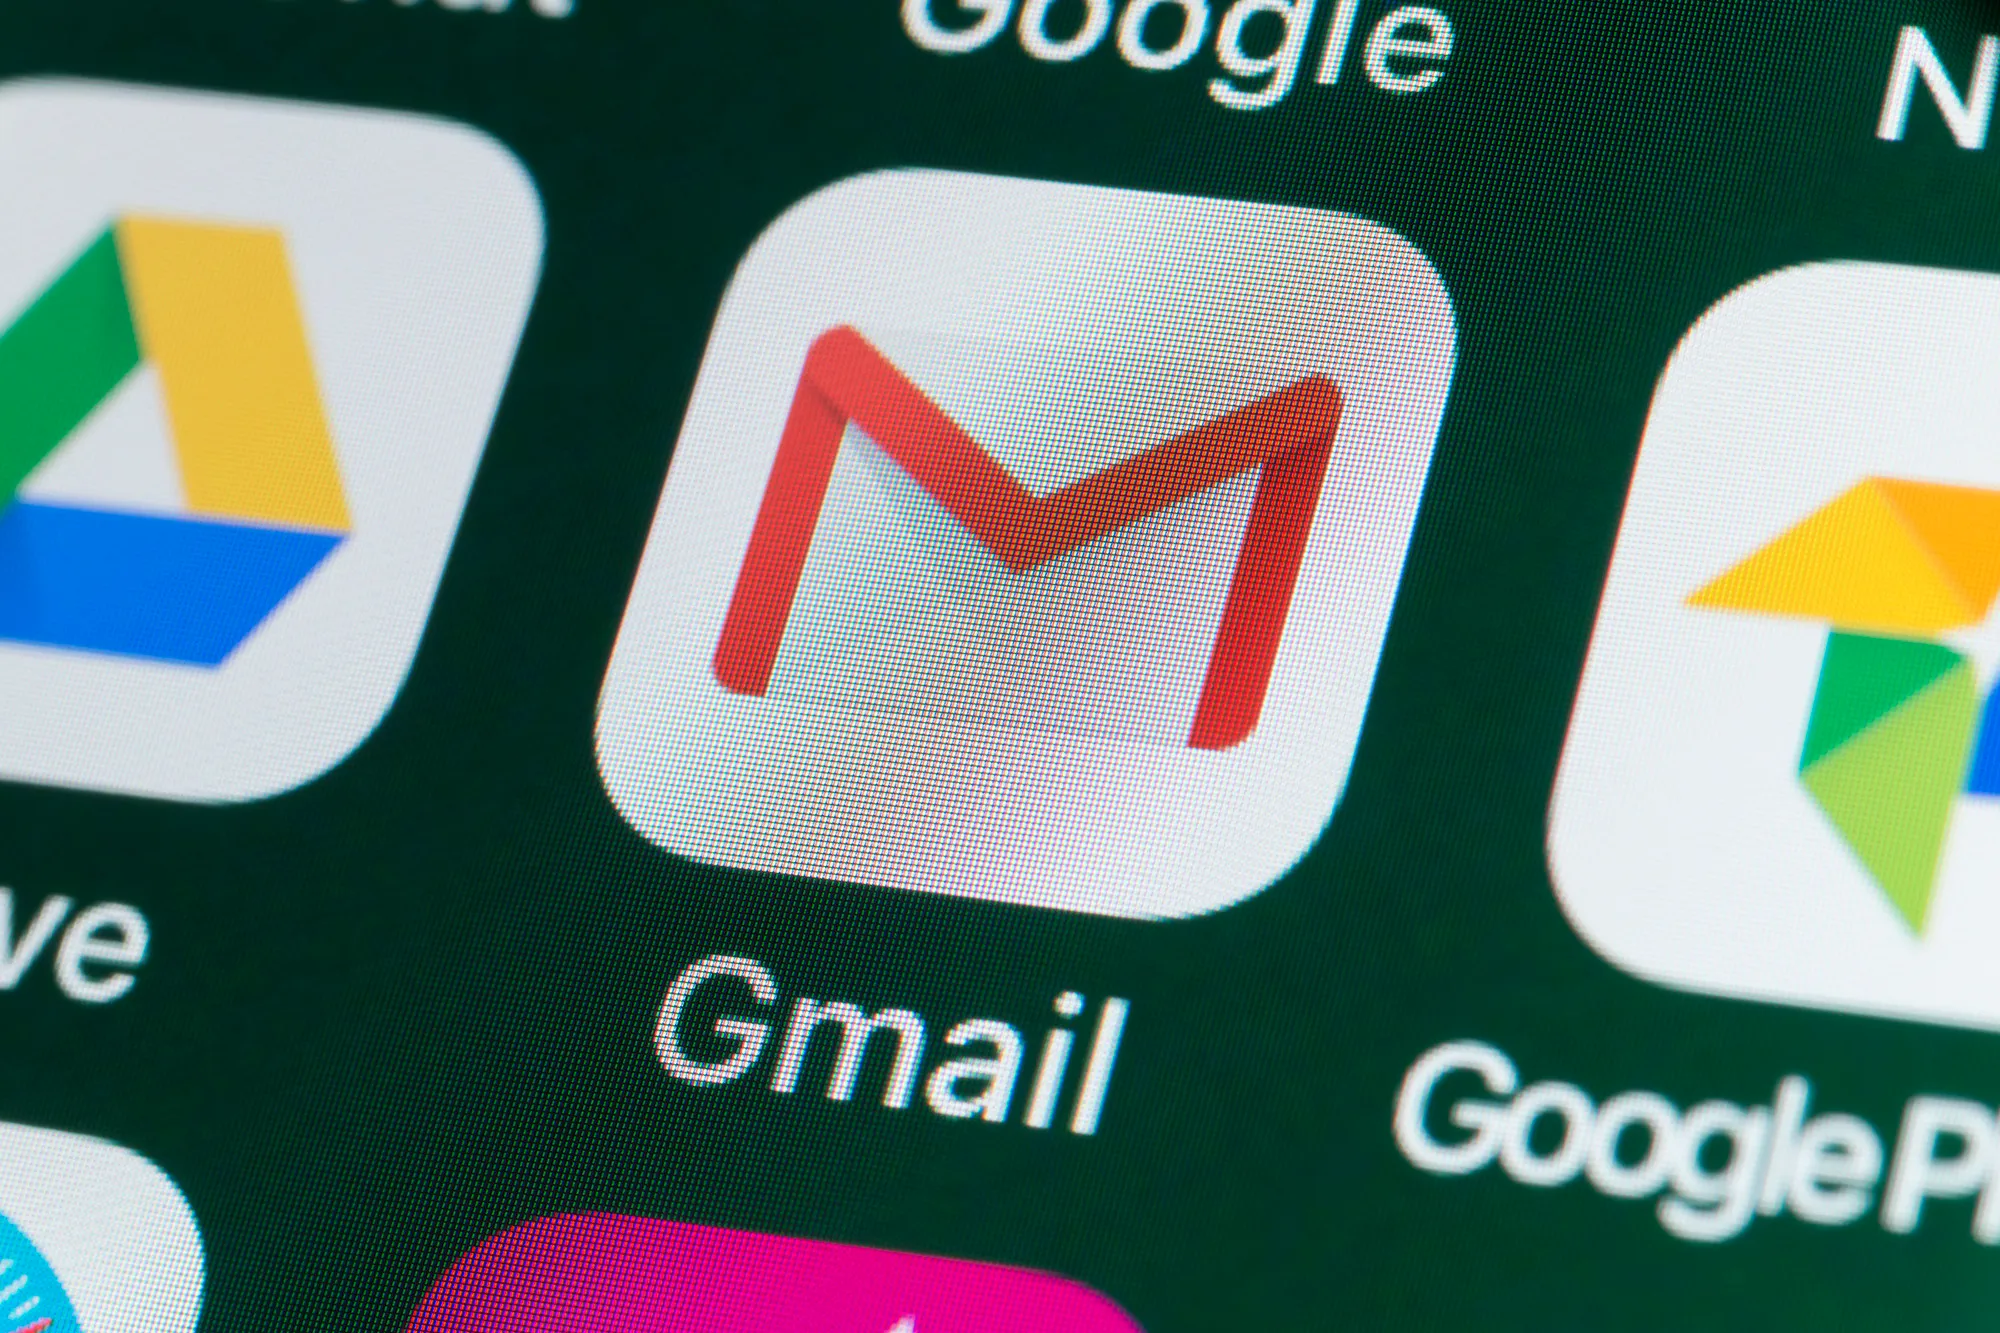 Google’s 2018 Gmail update image